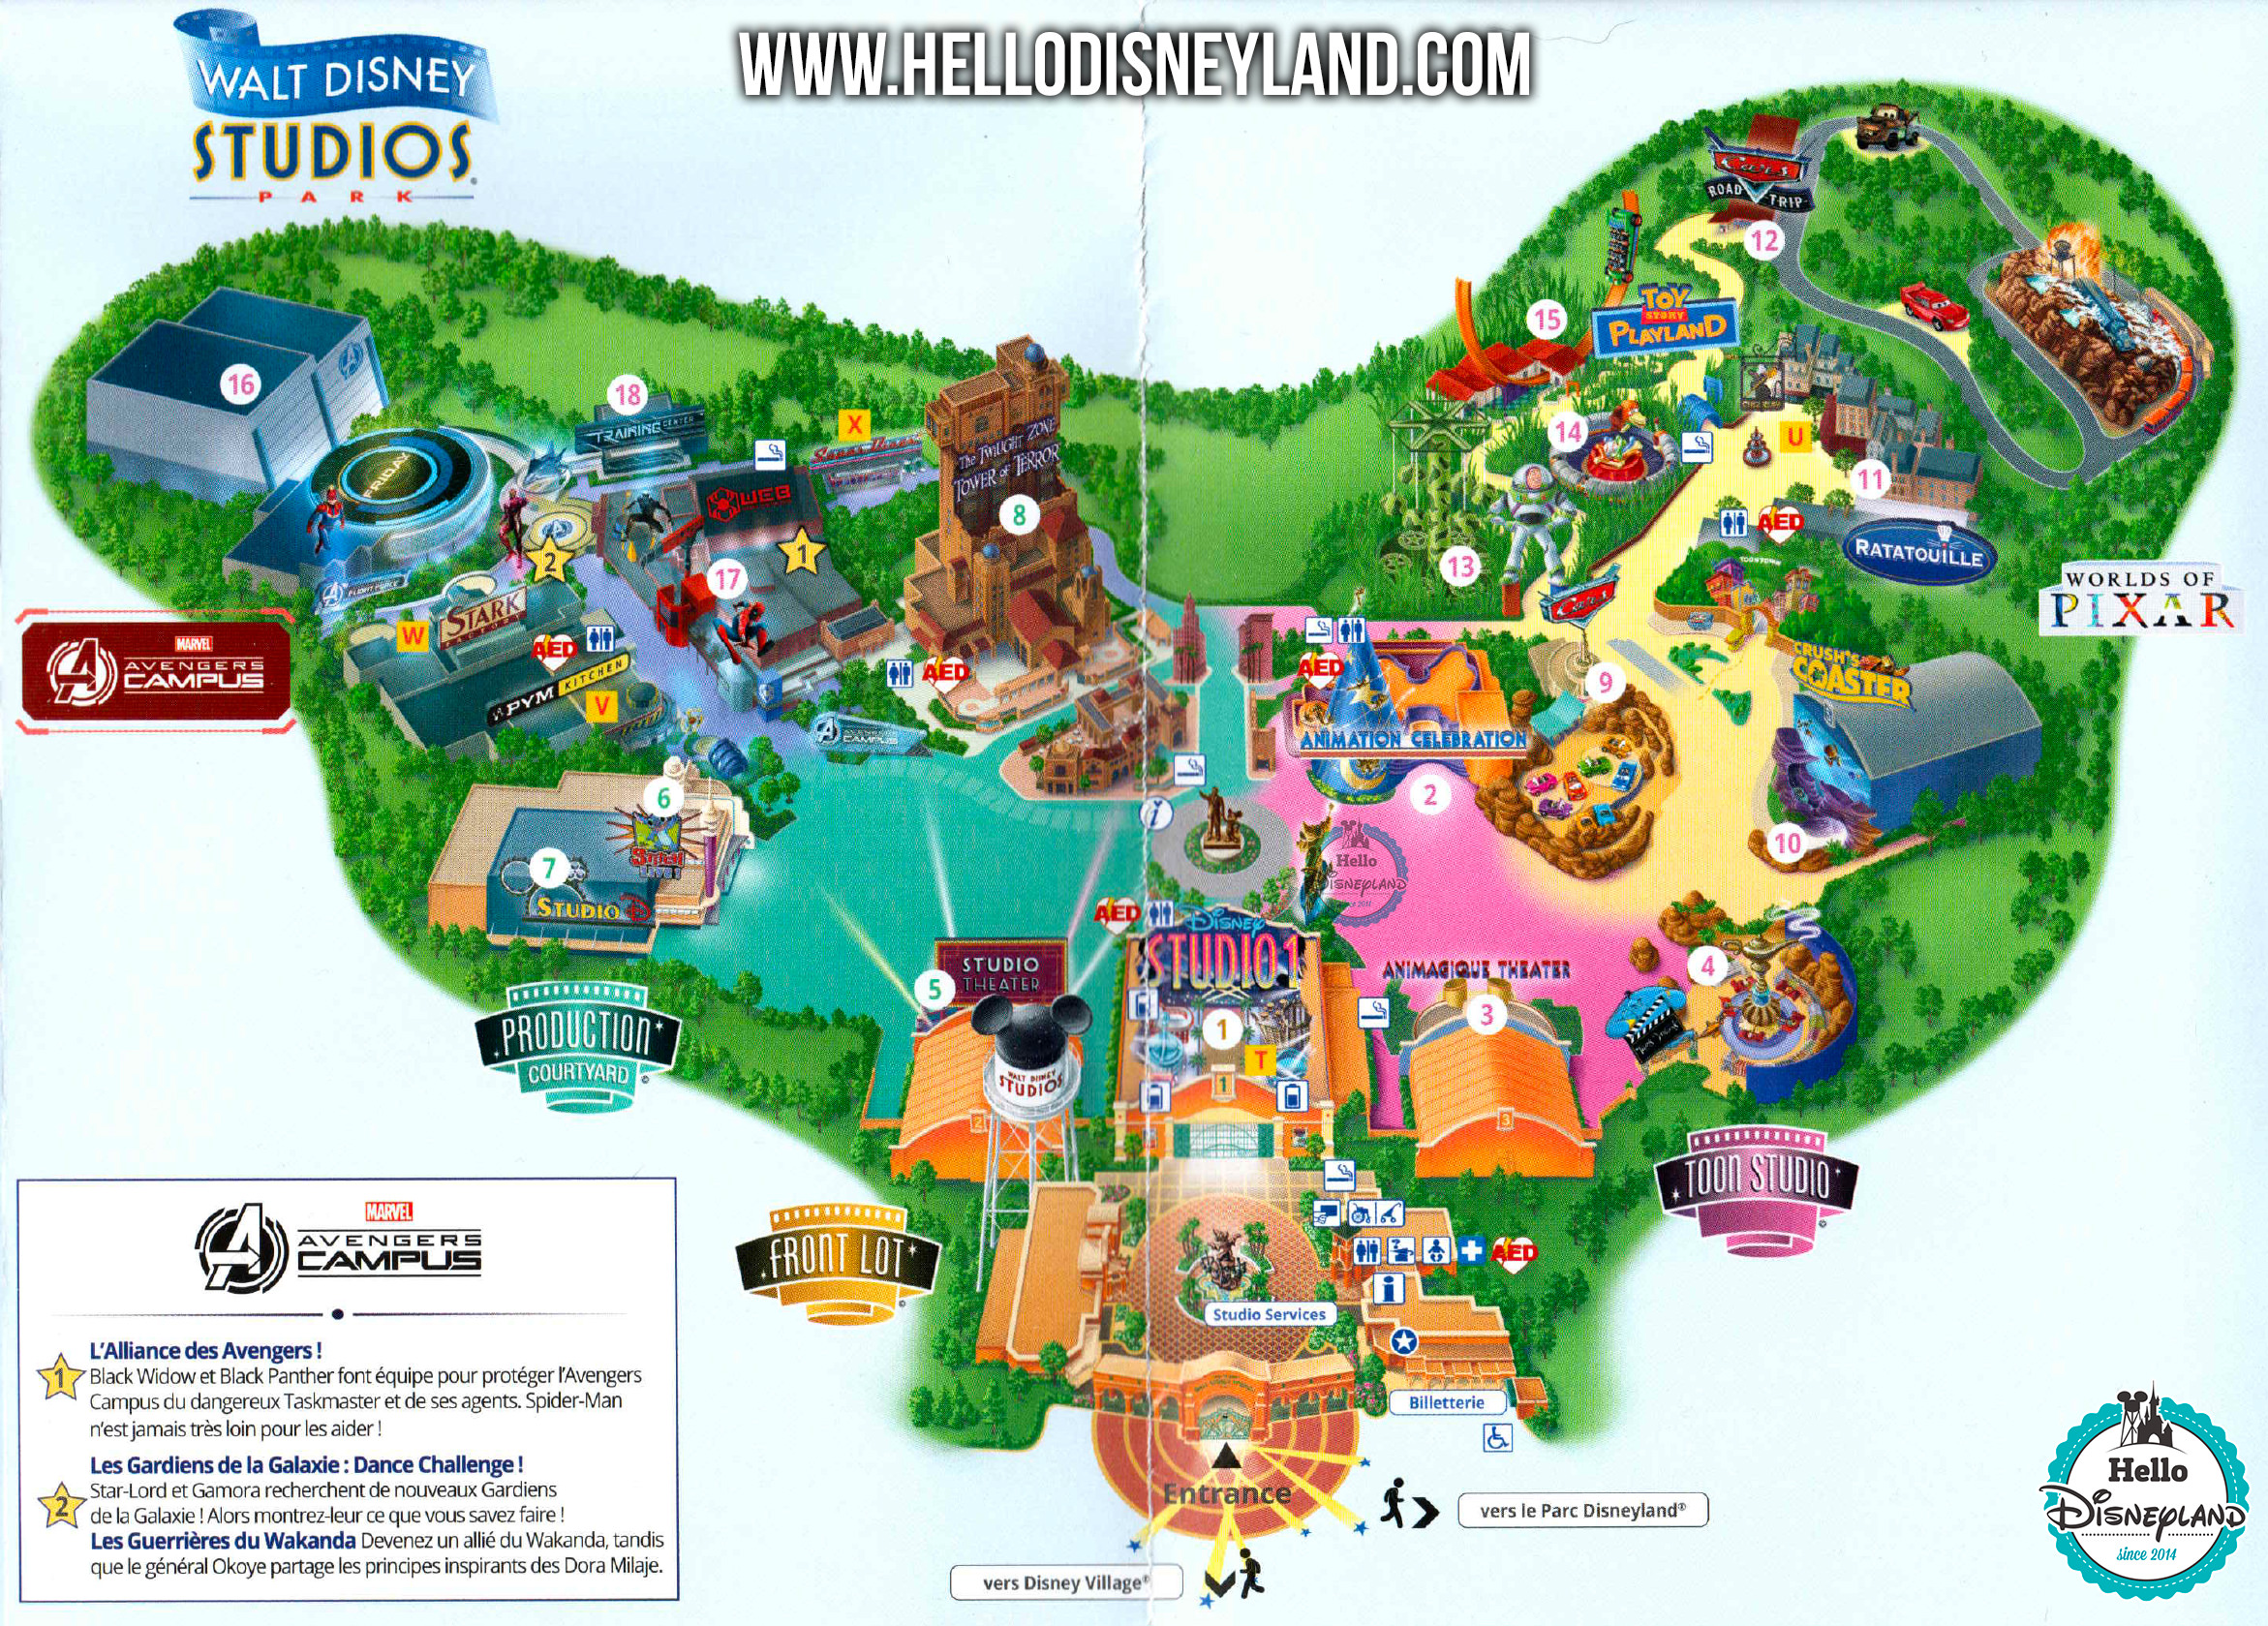 Plan Disneyland Paris : Parc Walt Disney Studios